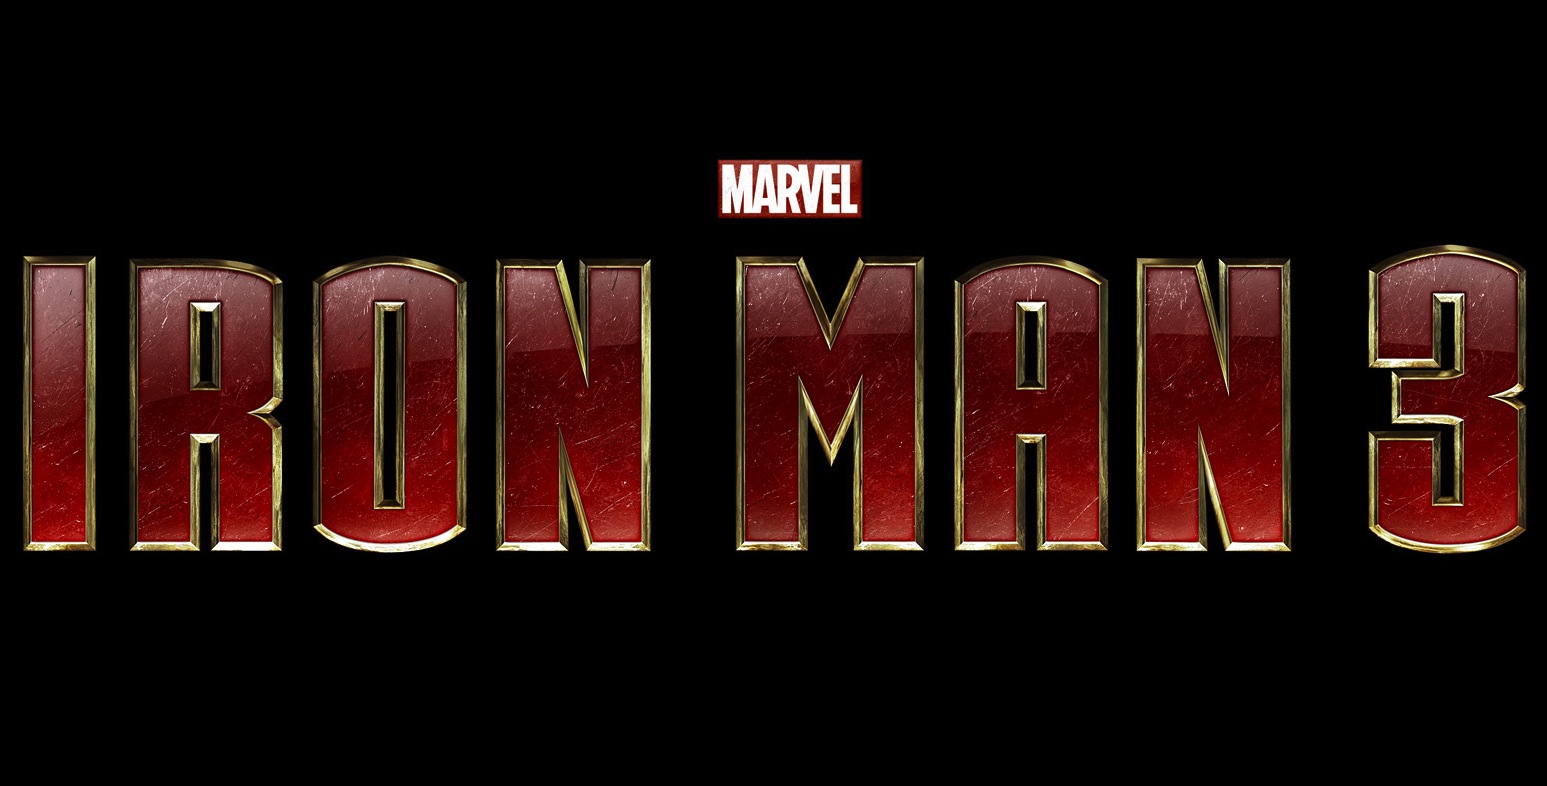 Ver Iron Man 3 Online Castellano Completa